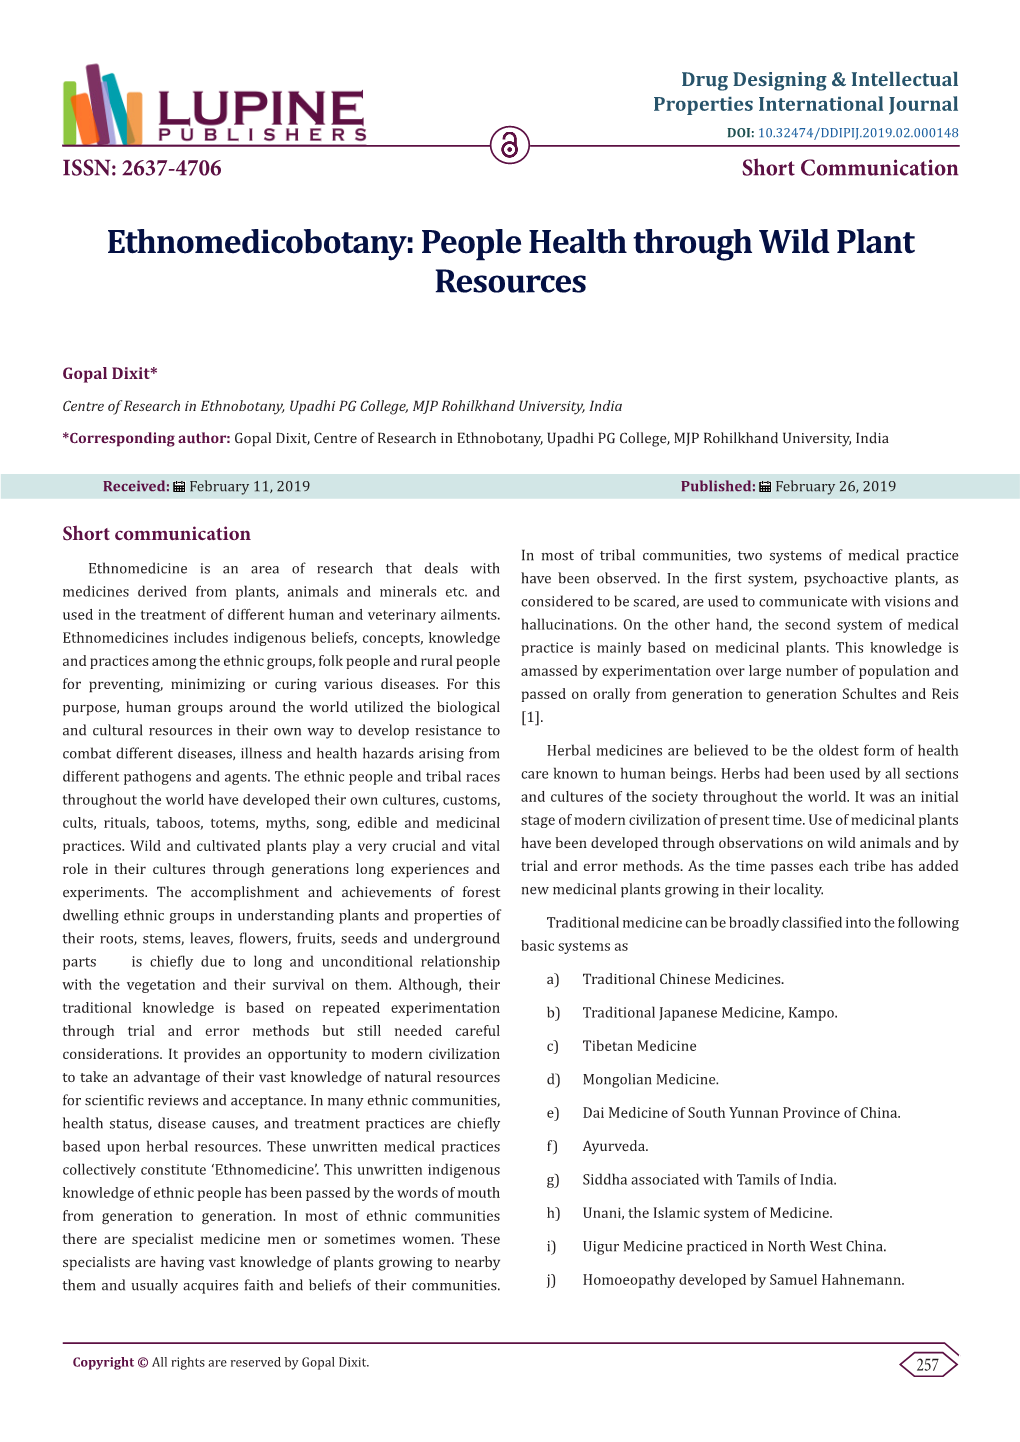 Ethnomedicobotany: People Health Through Wild Plant Resources